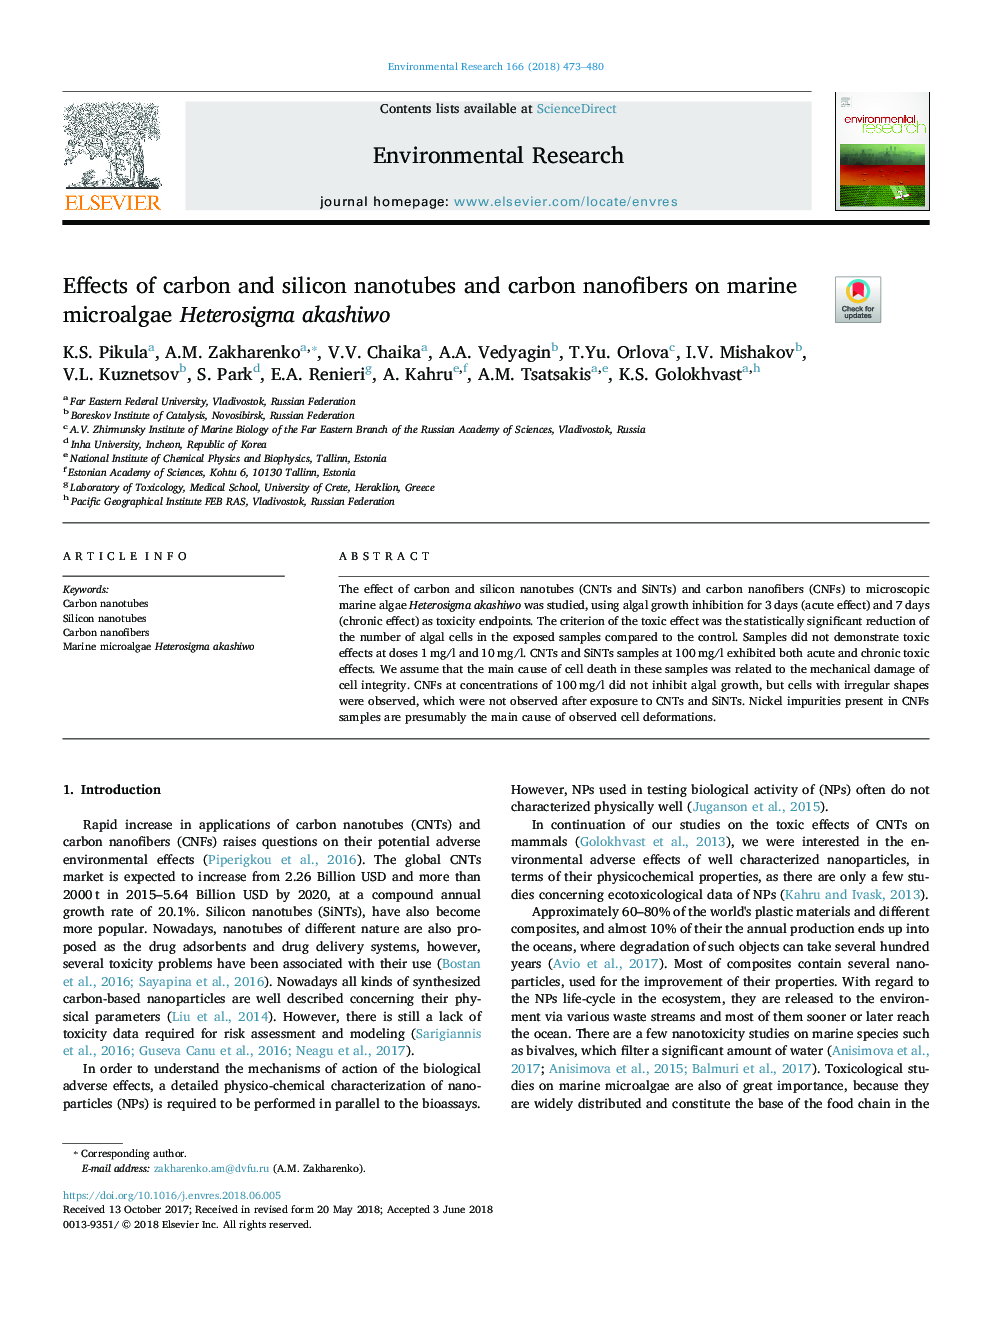 Effects of carbon and silicon nanotubes and carbon nanofibers on marine microalgae Heterosigma akashiwo